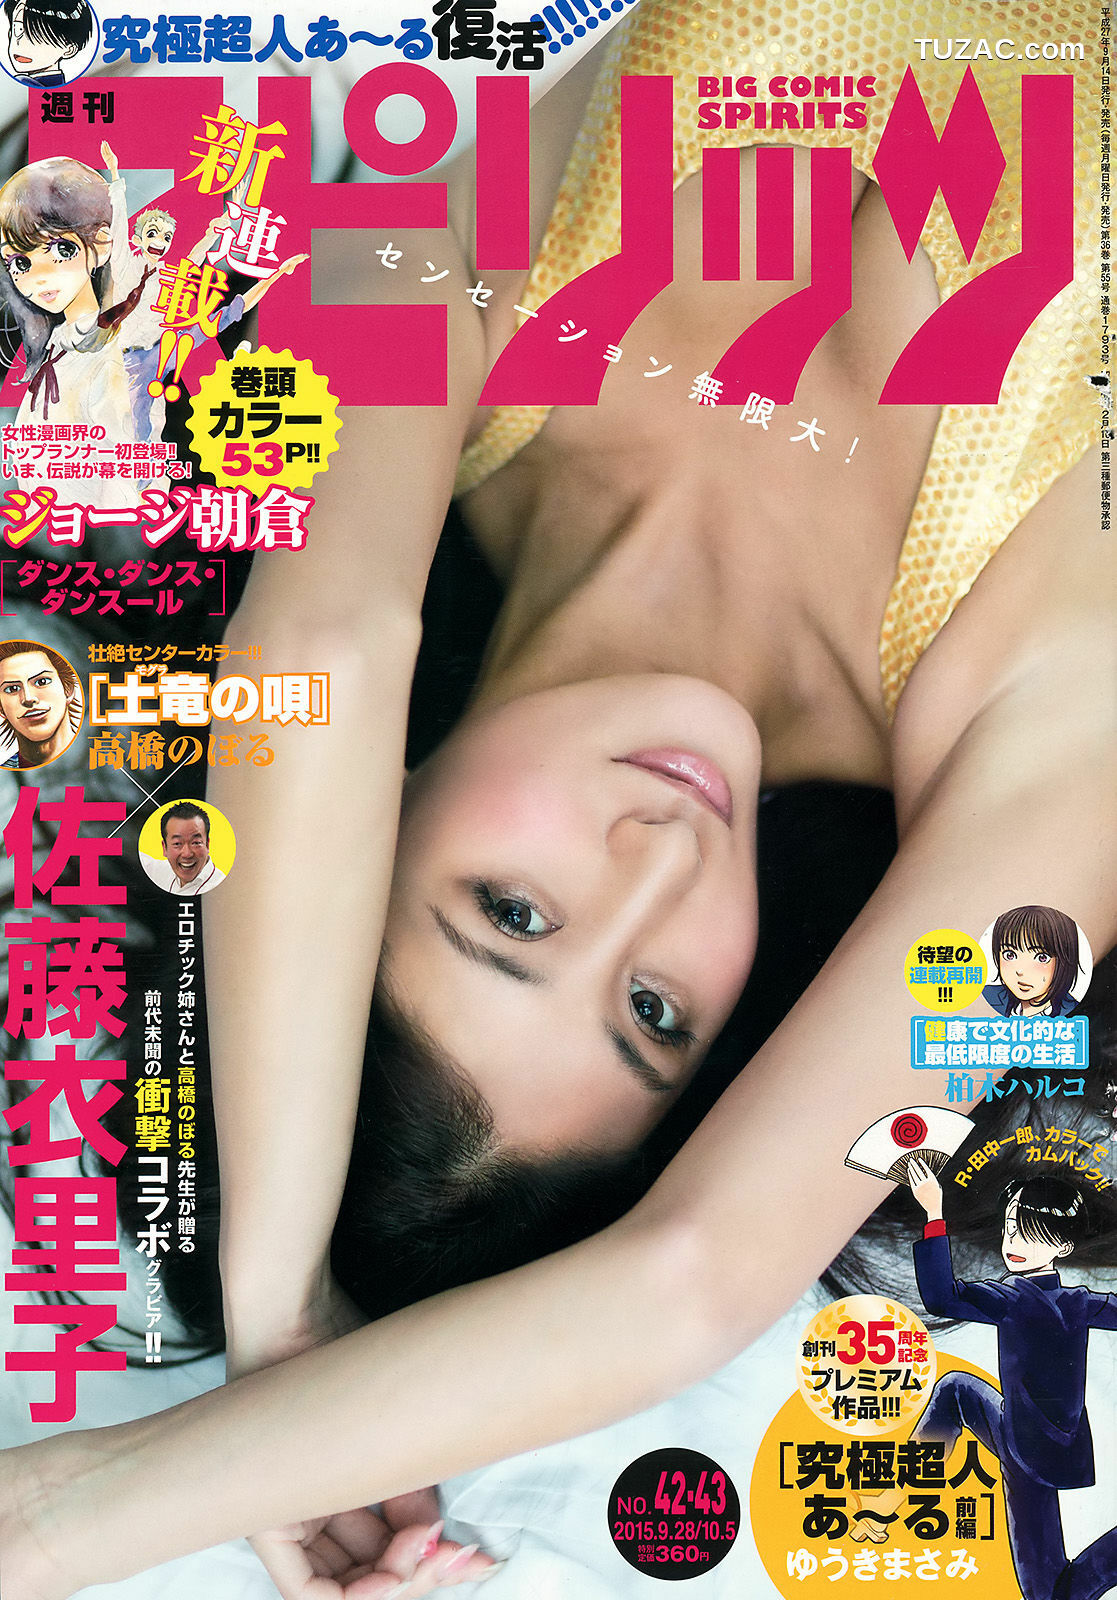 Weekly Big Comic Spirits杂志写真_ 佐藤衣里子 2015年No.42-43 写真杂志[9P]